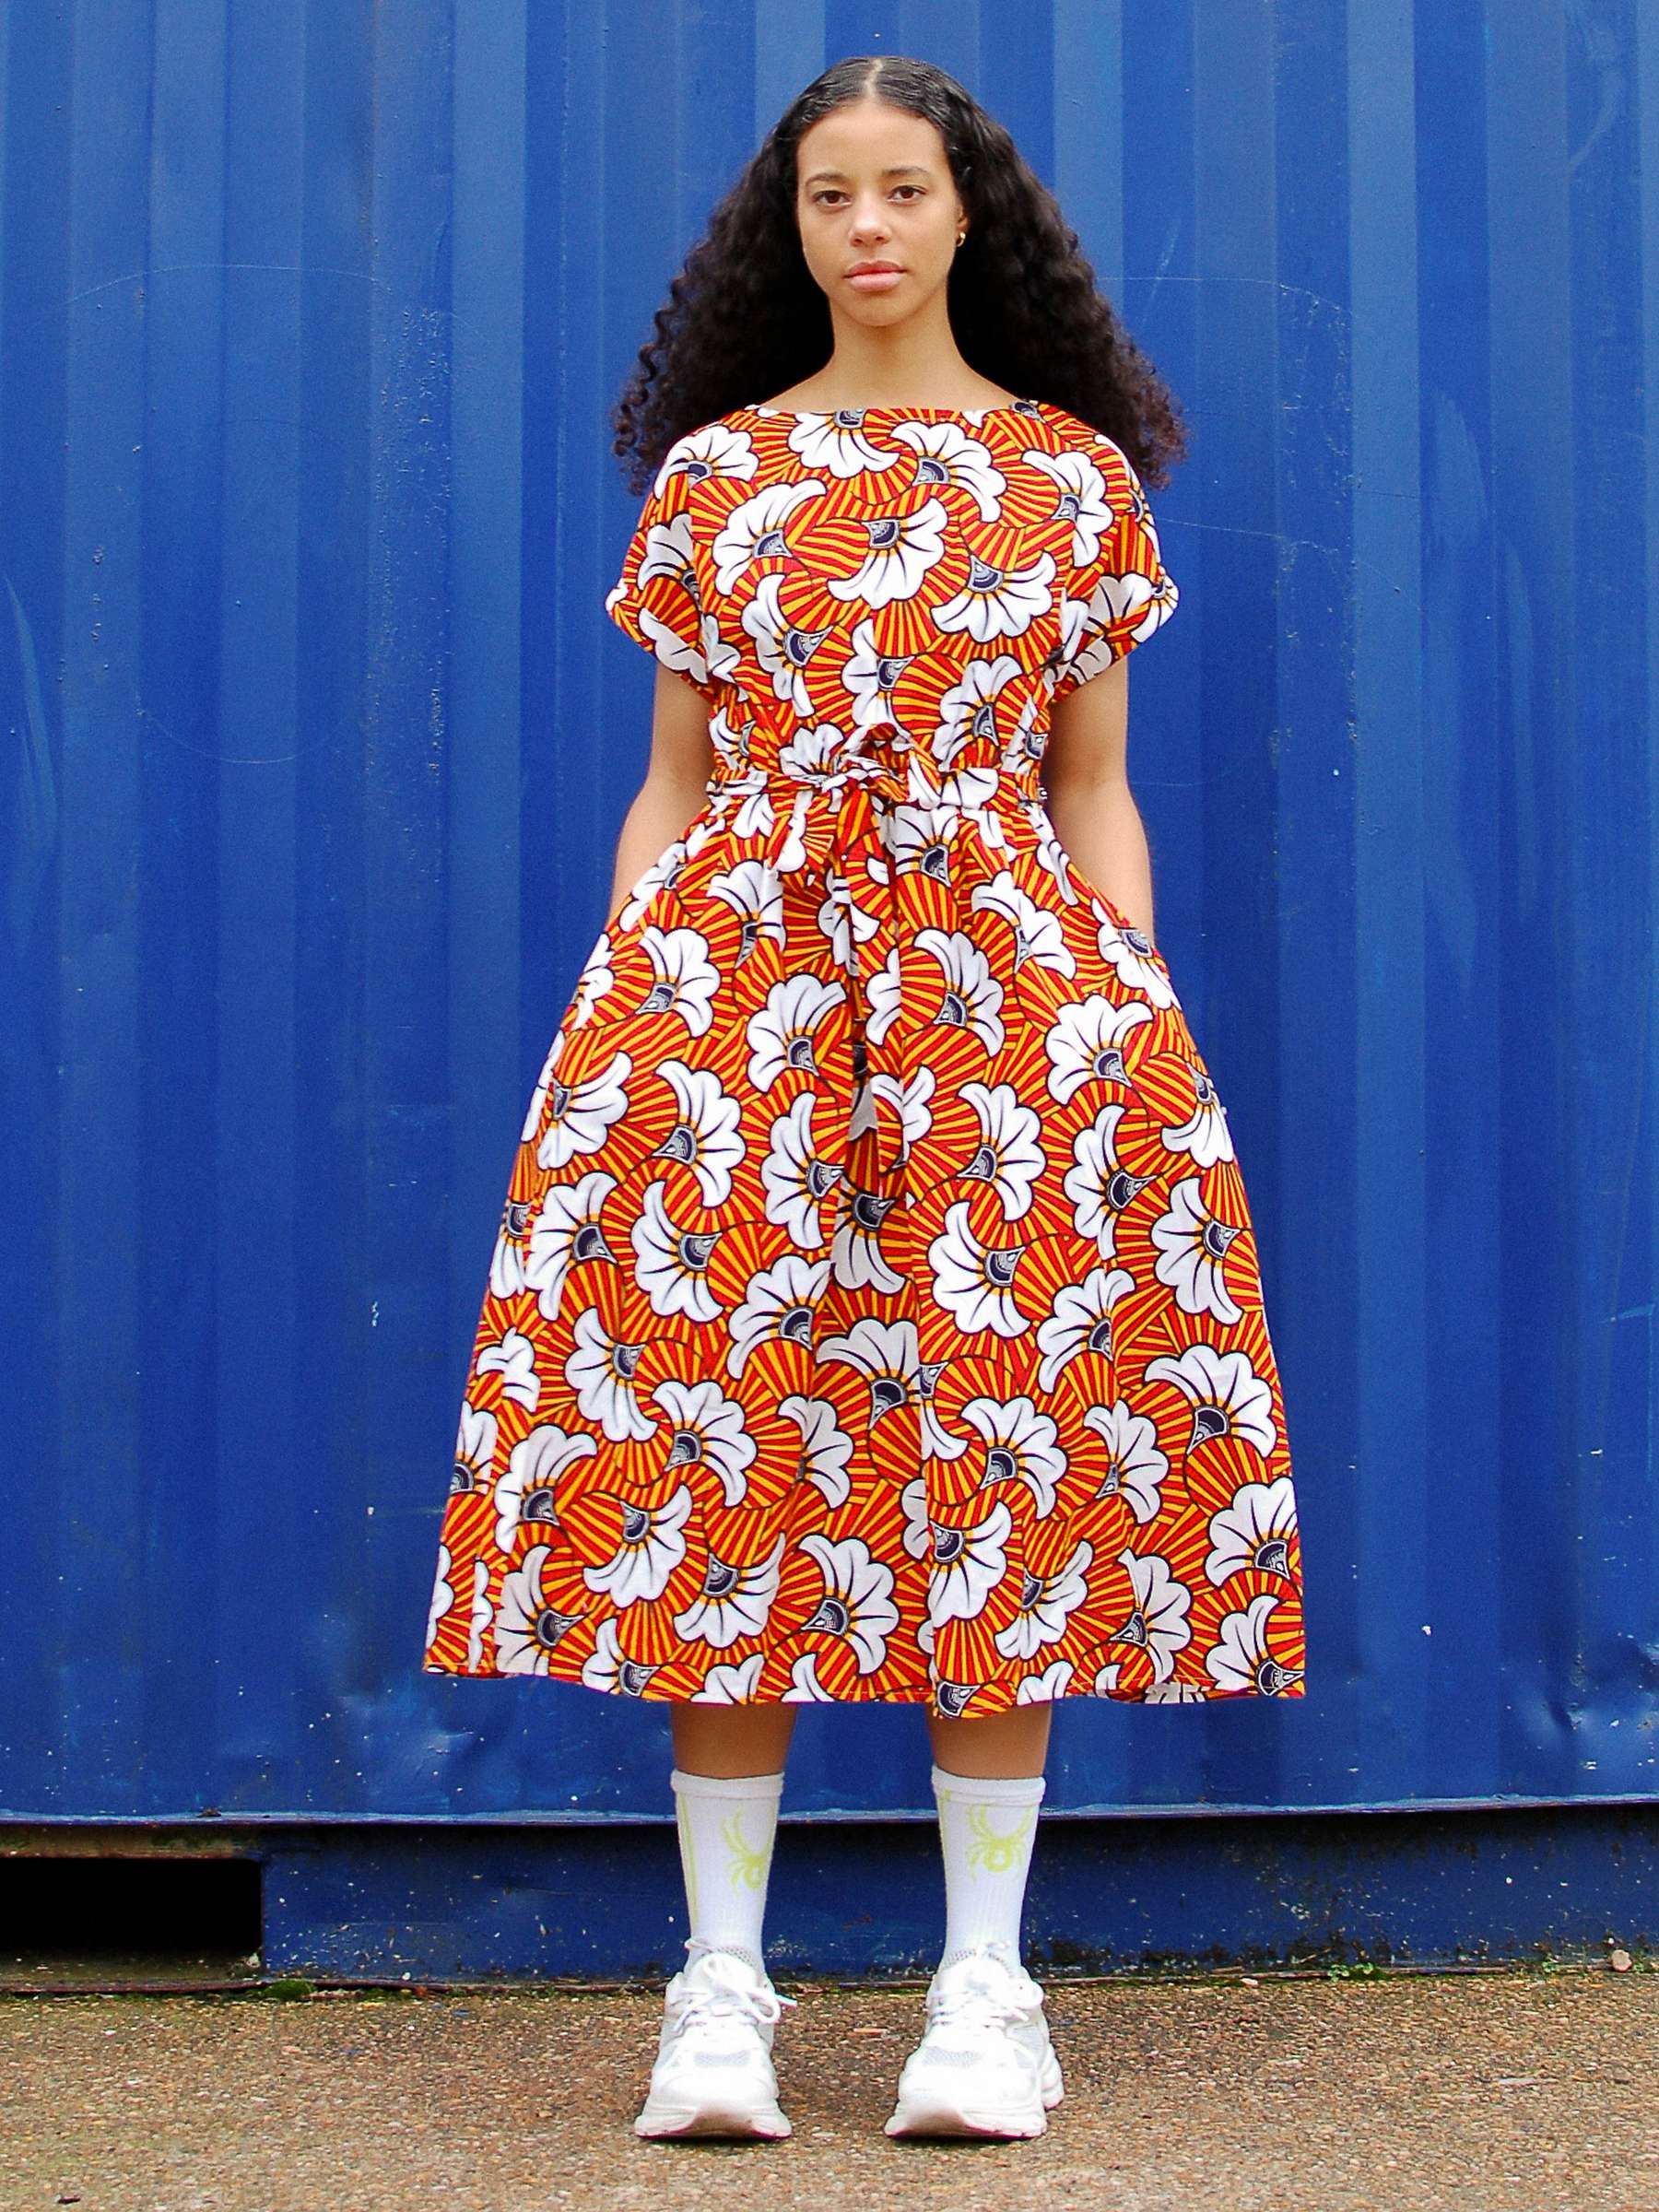 Buy Kemi Telford Abstract Floral Print Cotton Dress, Orange Online at johnlewis.com